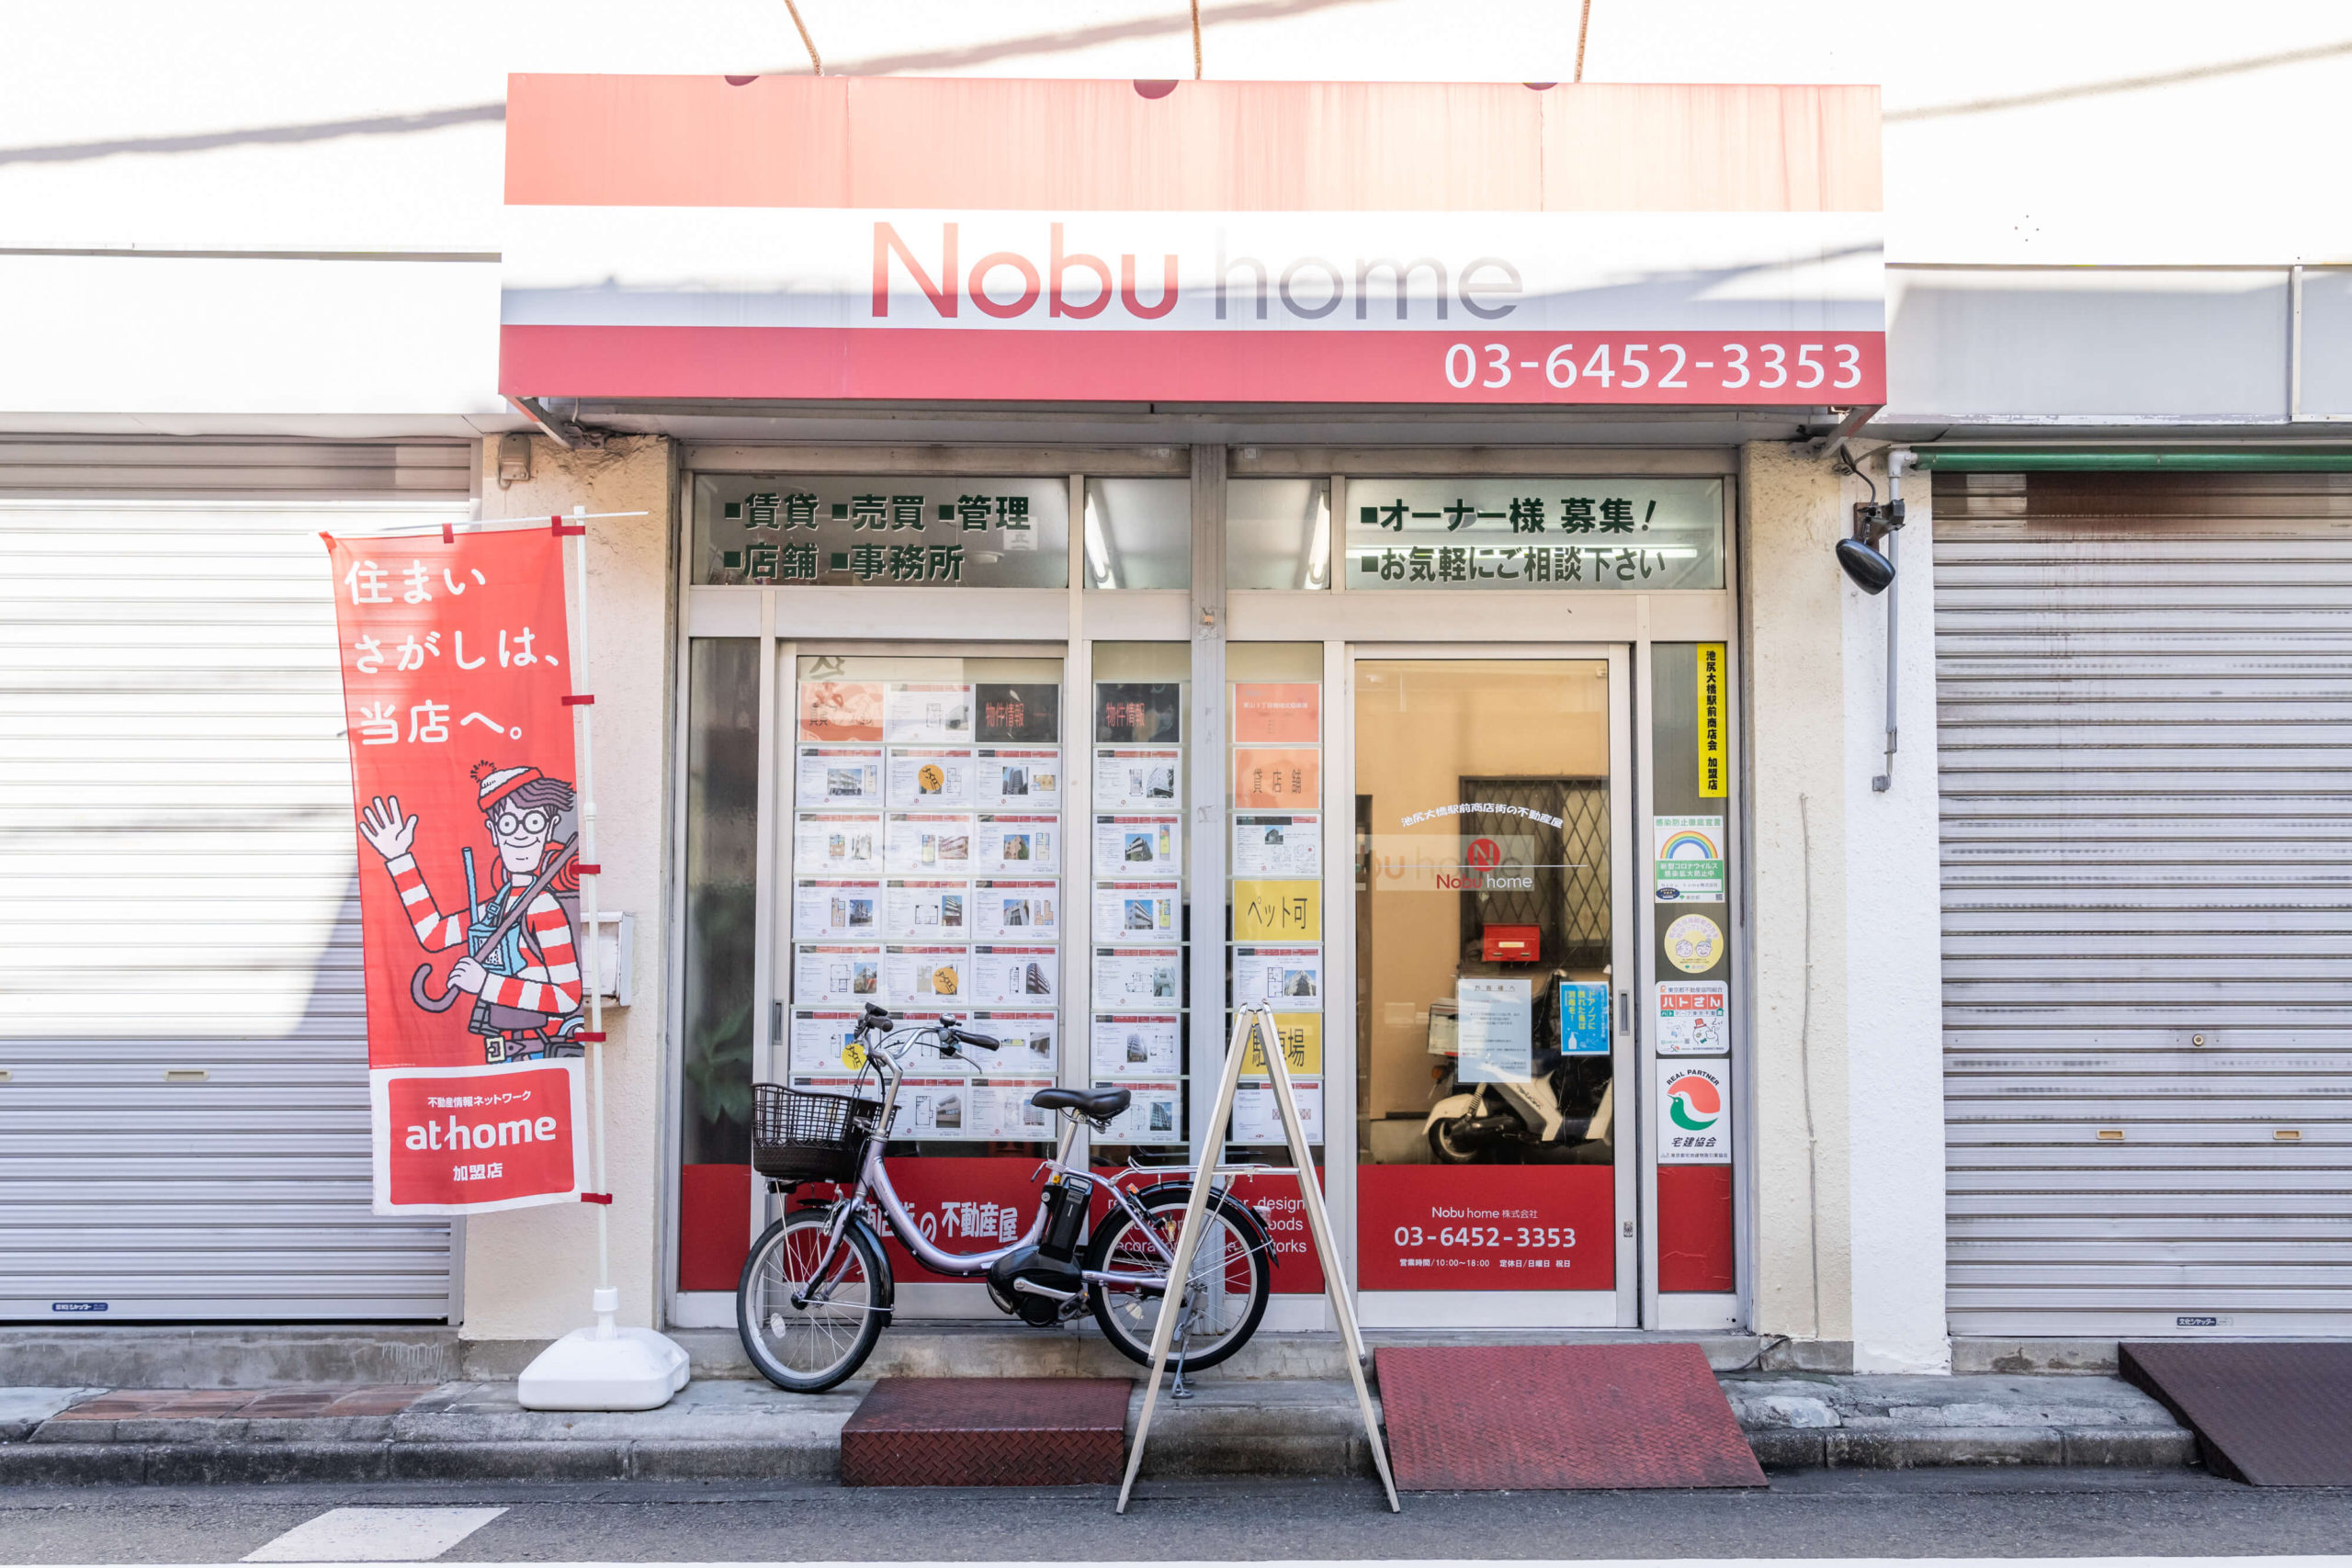 Nobu home 株式会社